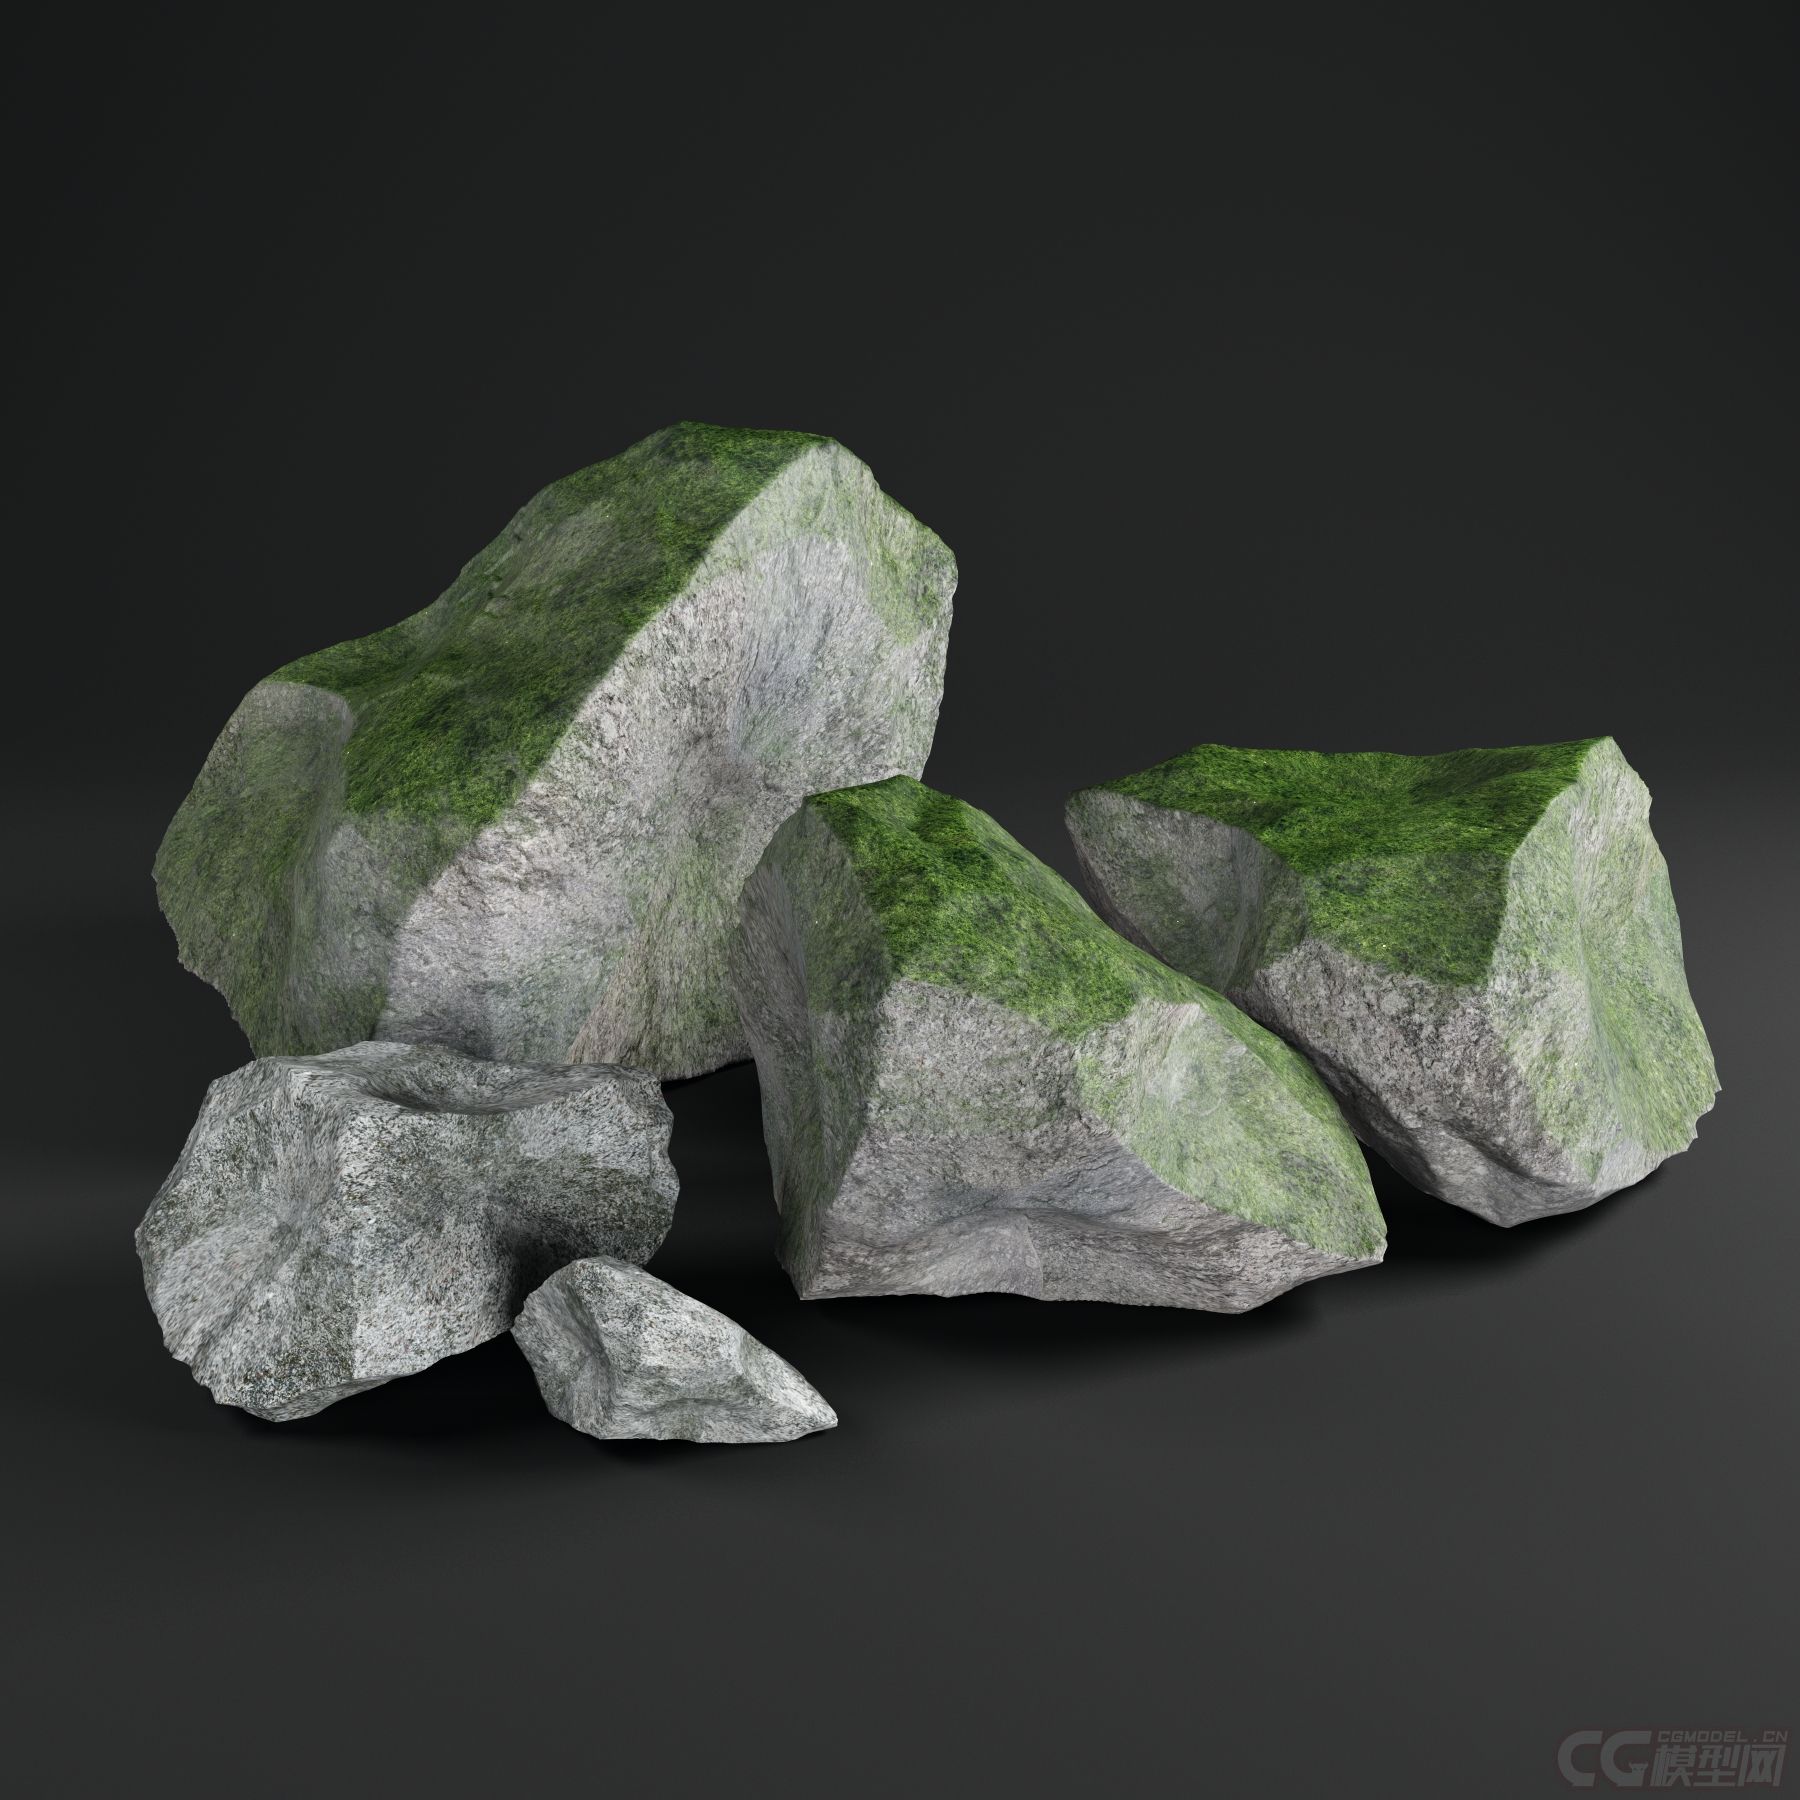 3d stone. Модели камней 3ds Max. Камень 3д модель. Макет камня. Ками для макета.